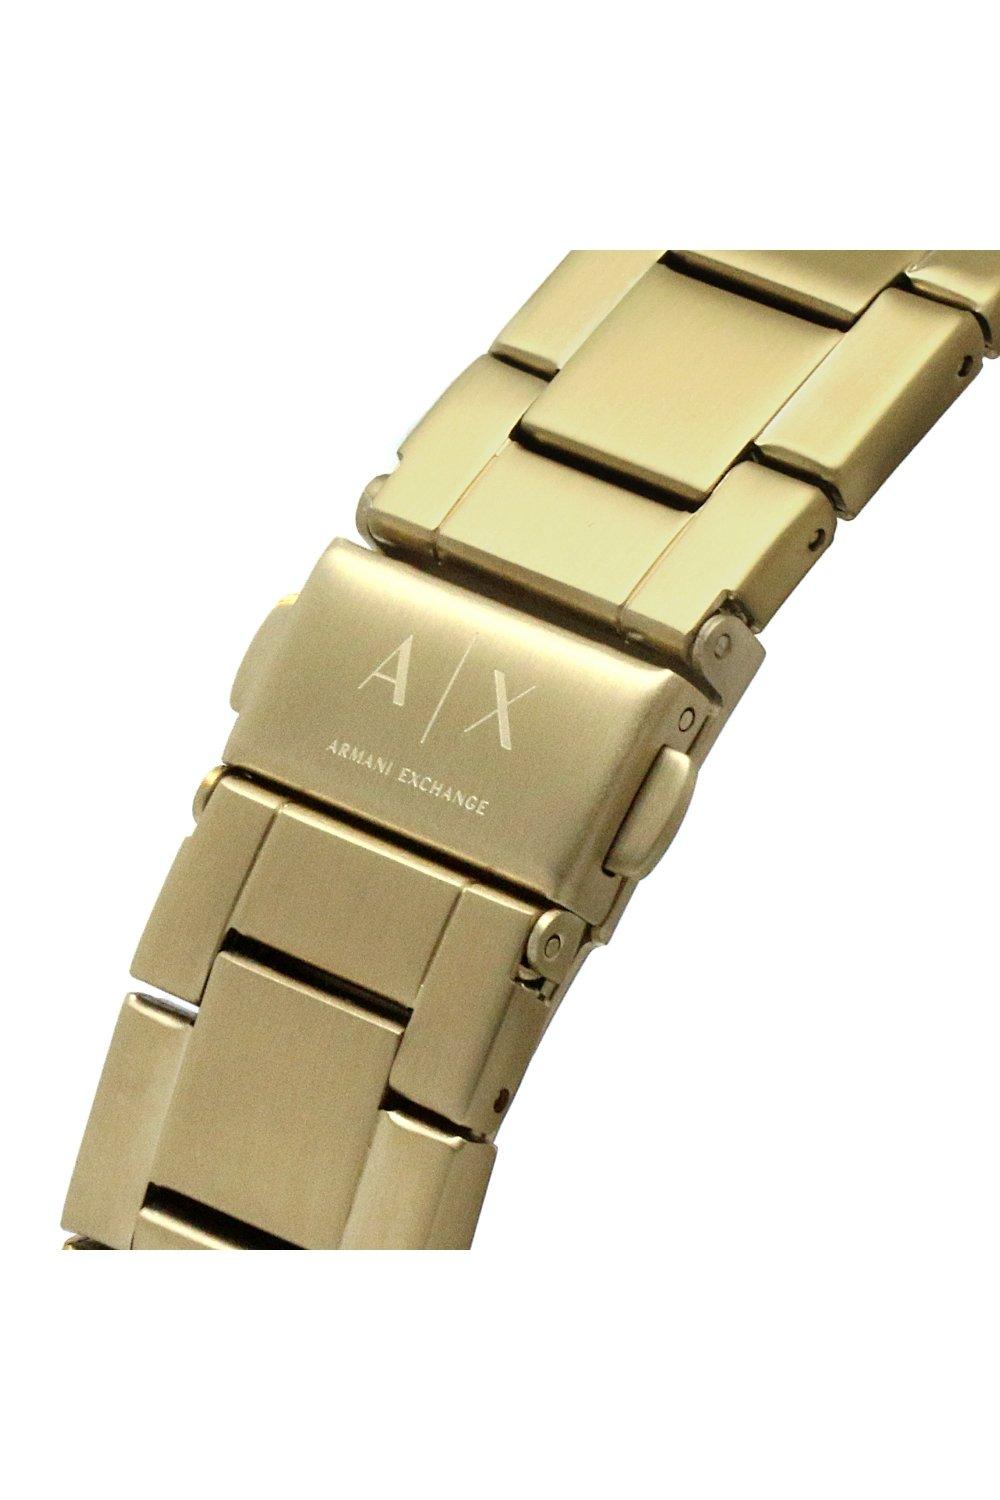 Watches | | Watch Stainless Ax1854 Fashion Steel Analogue - Quartz Exchange Armani